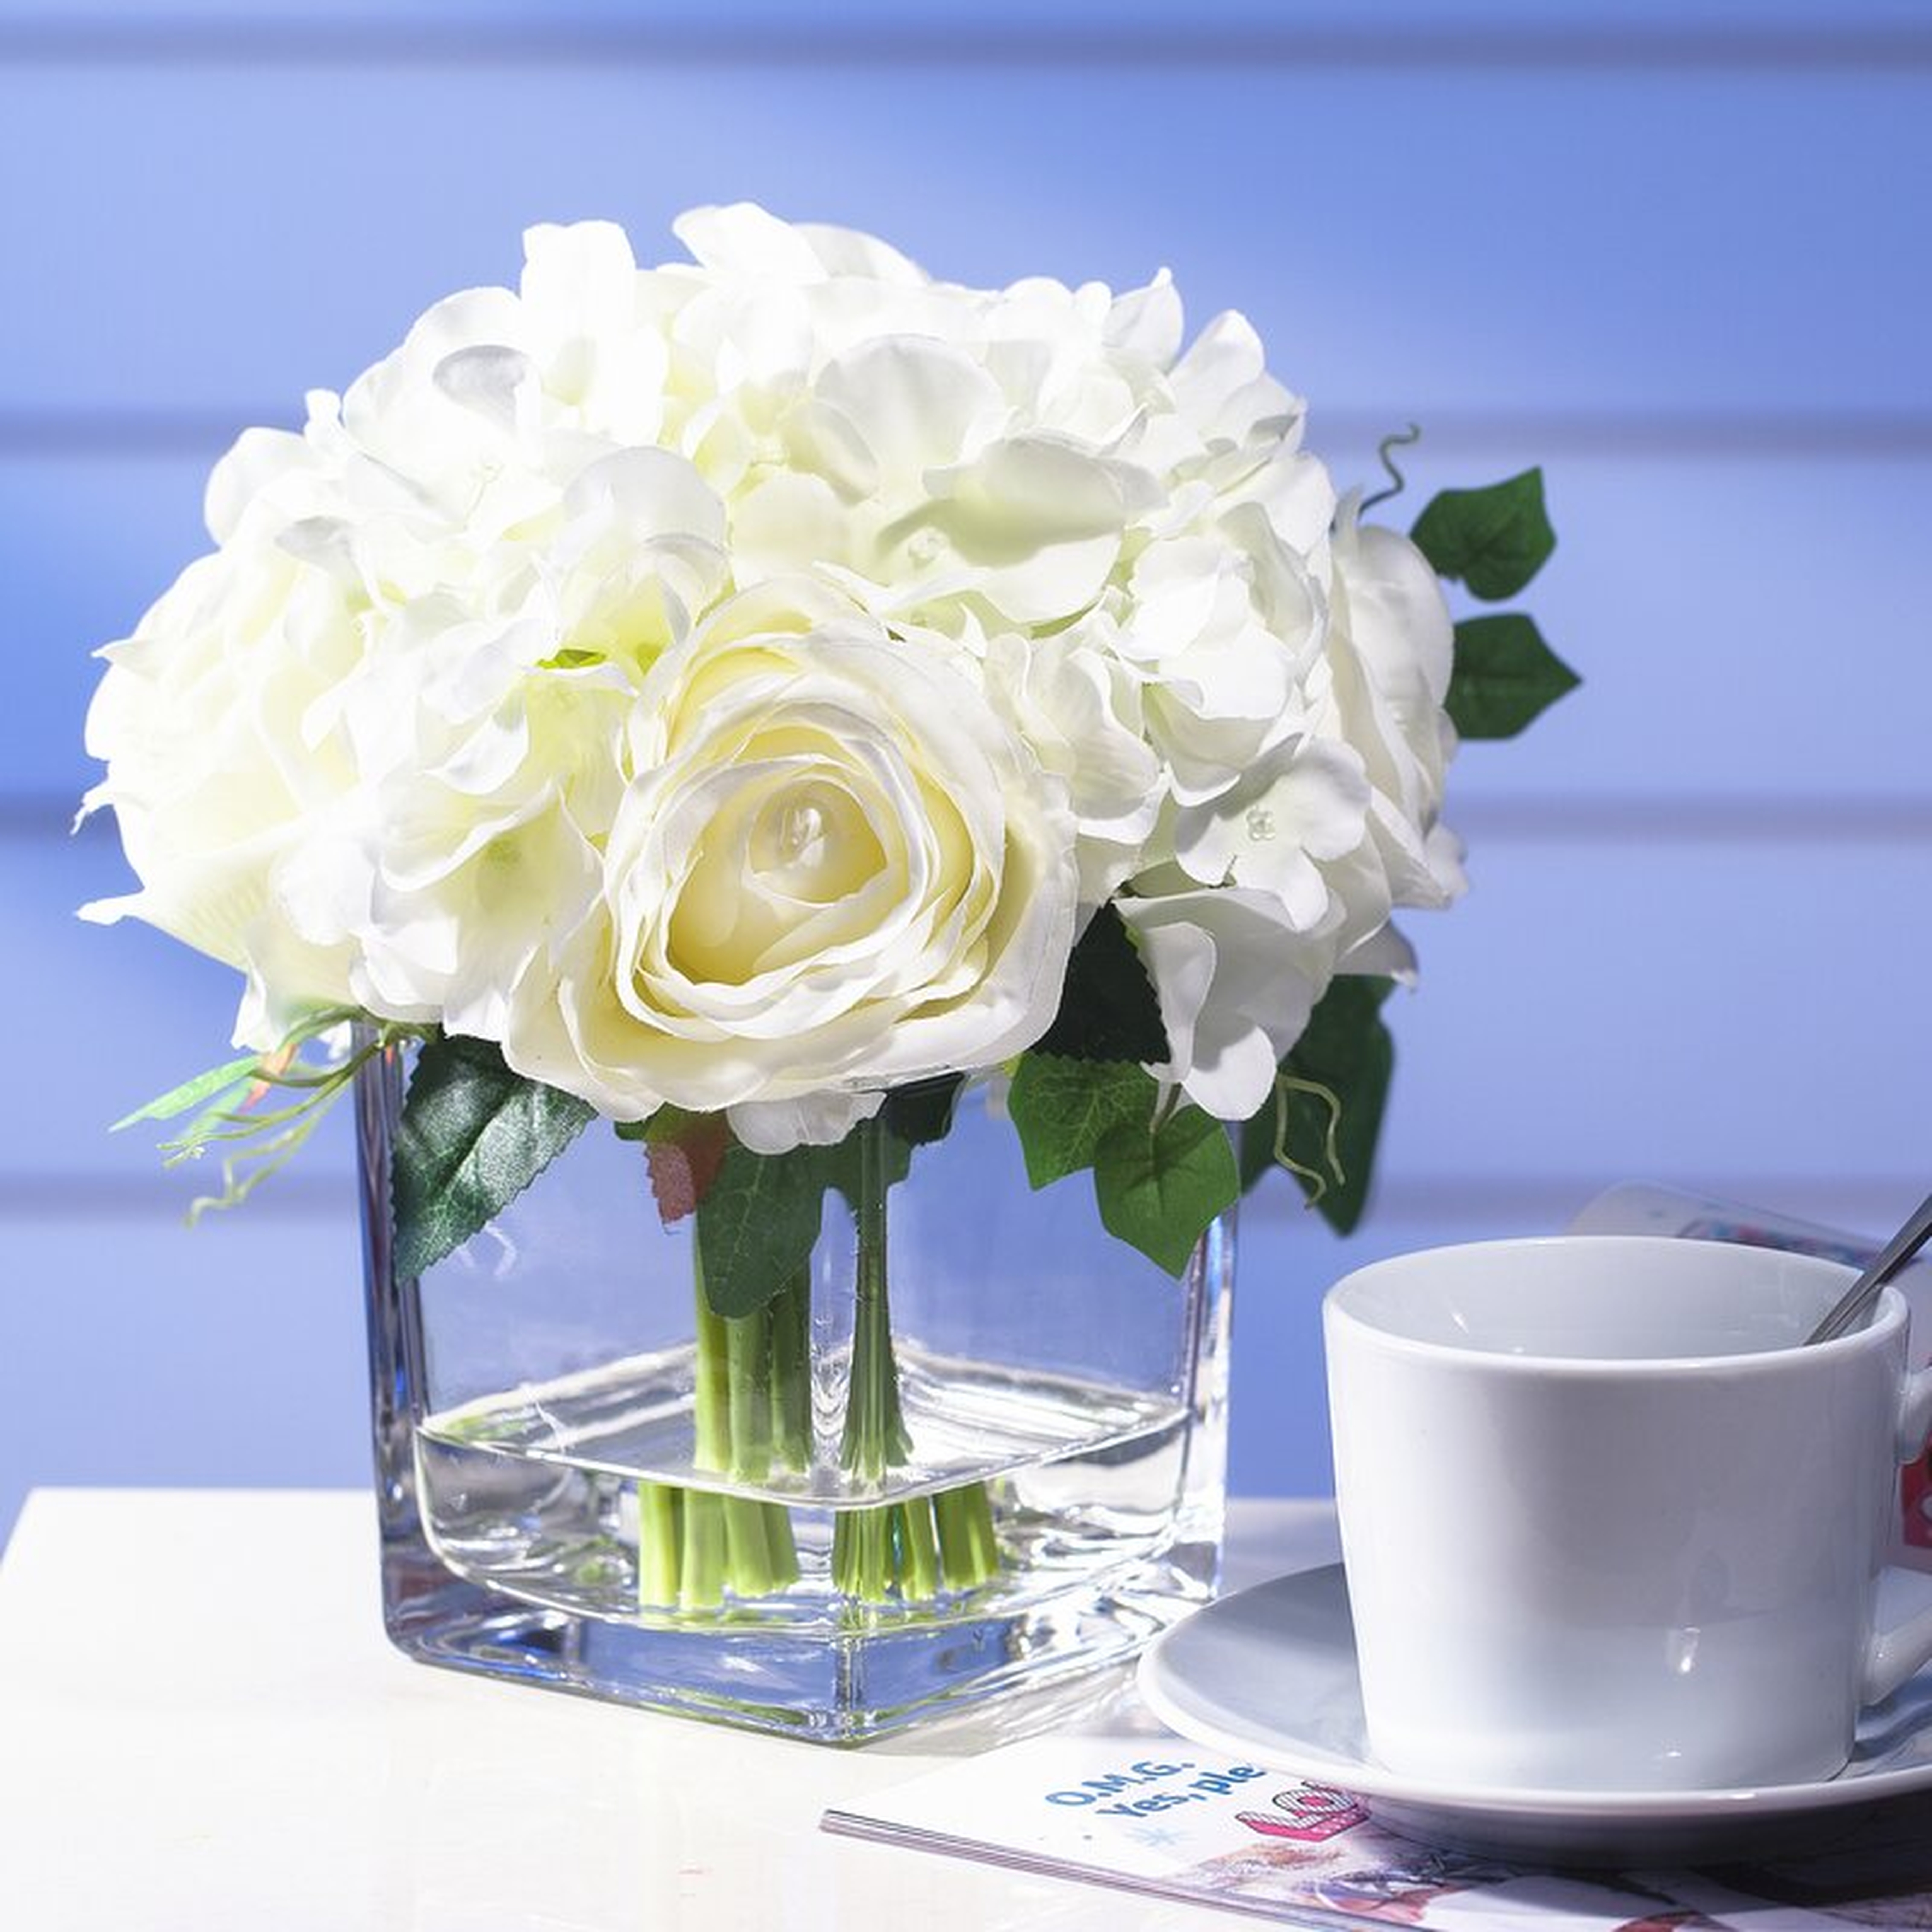 Hydrangea Flower Arrangement in Glass Vase - Wayfair